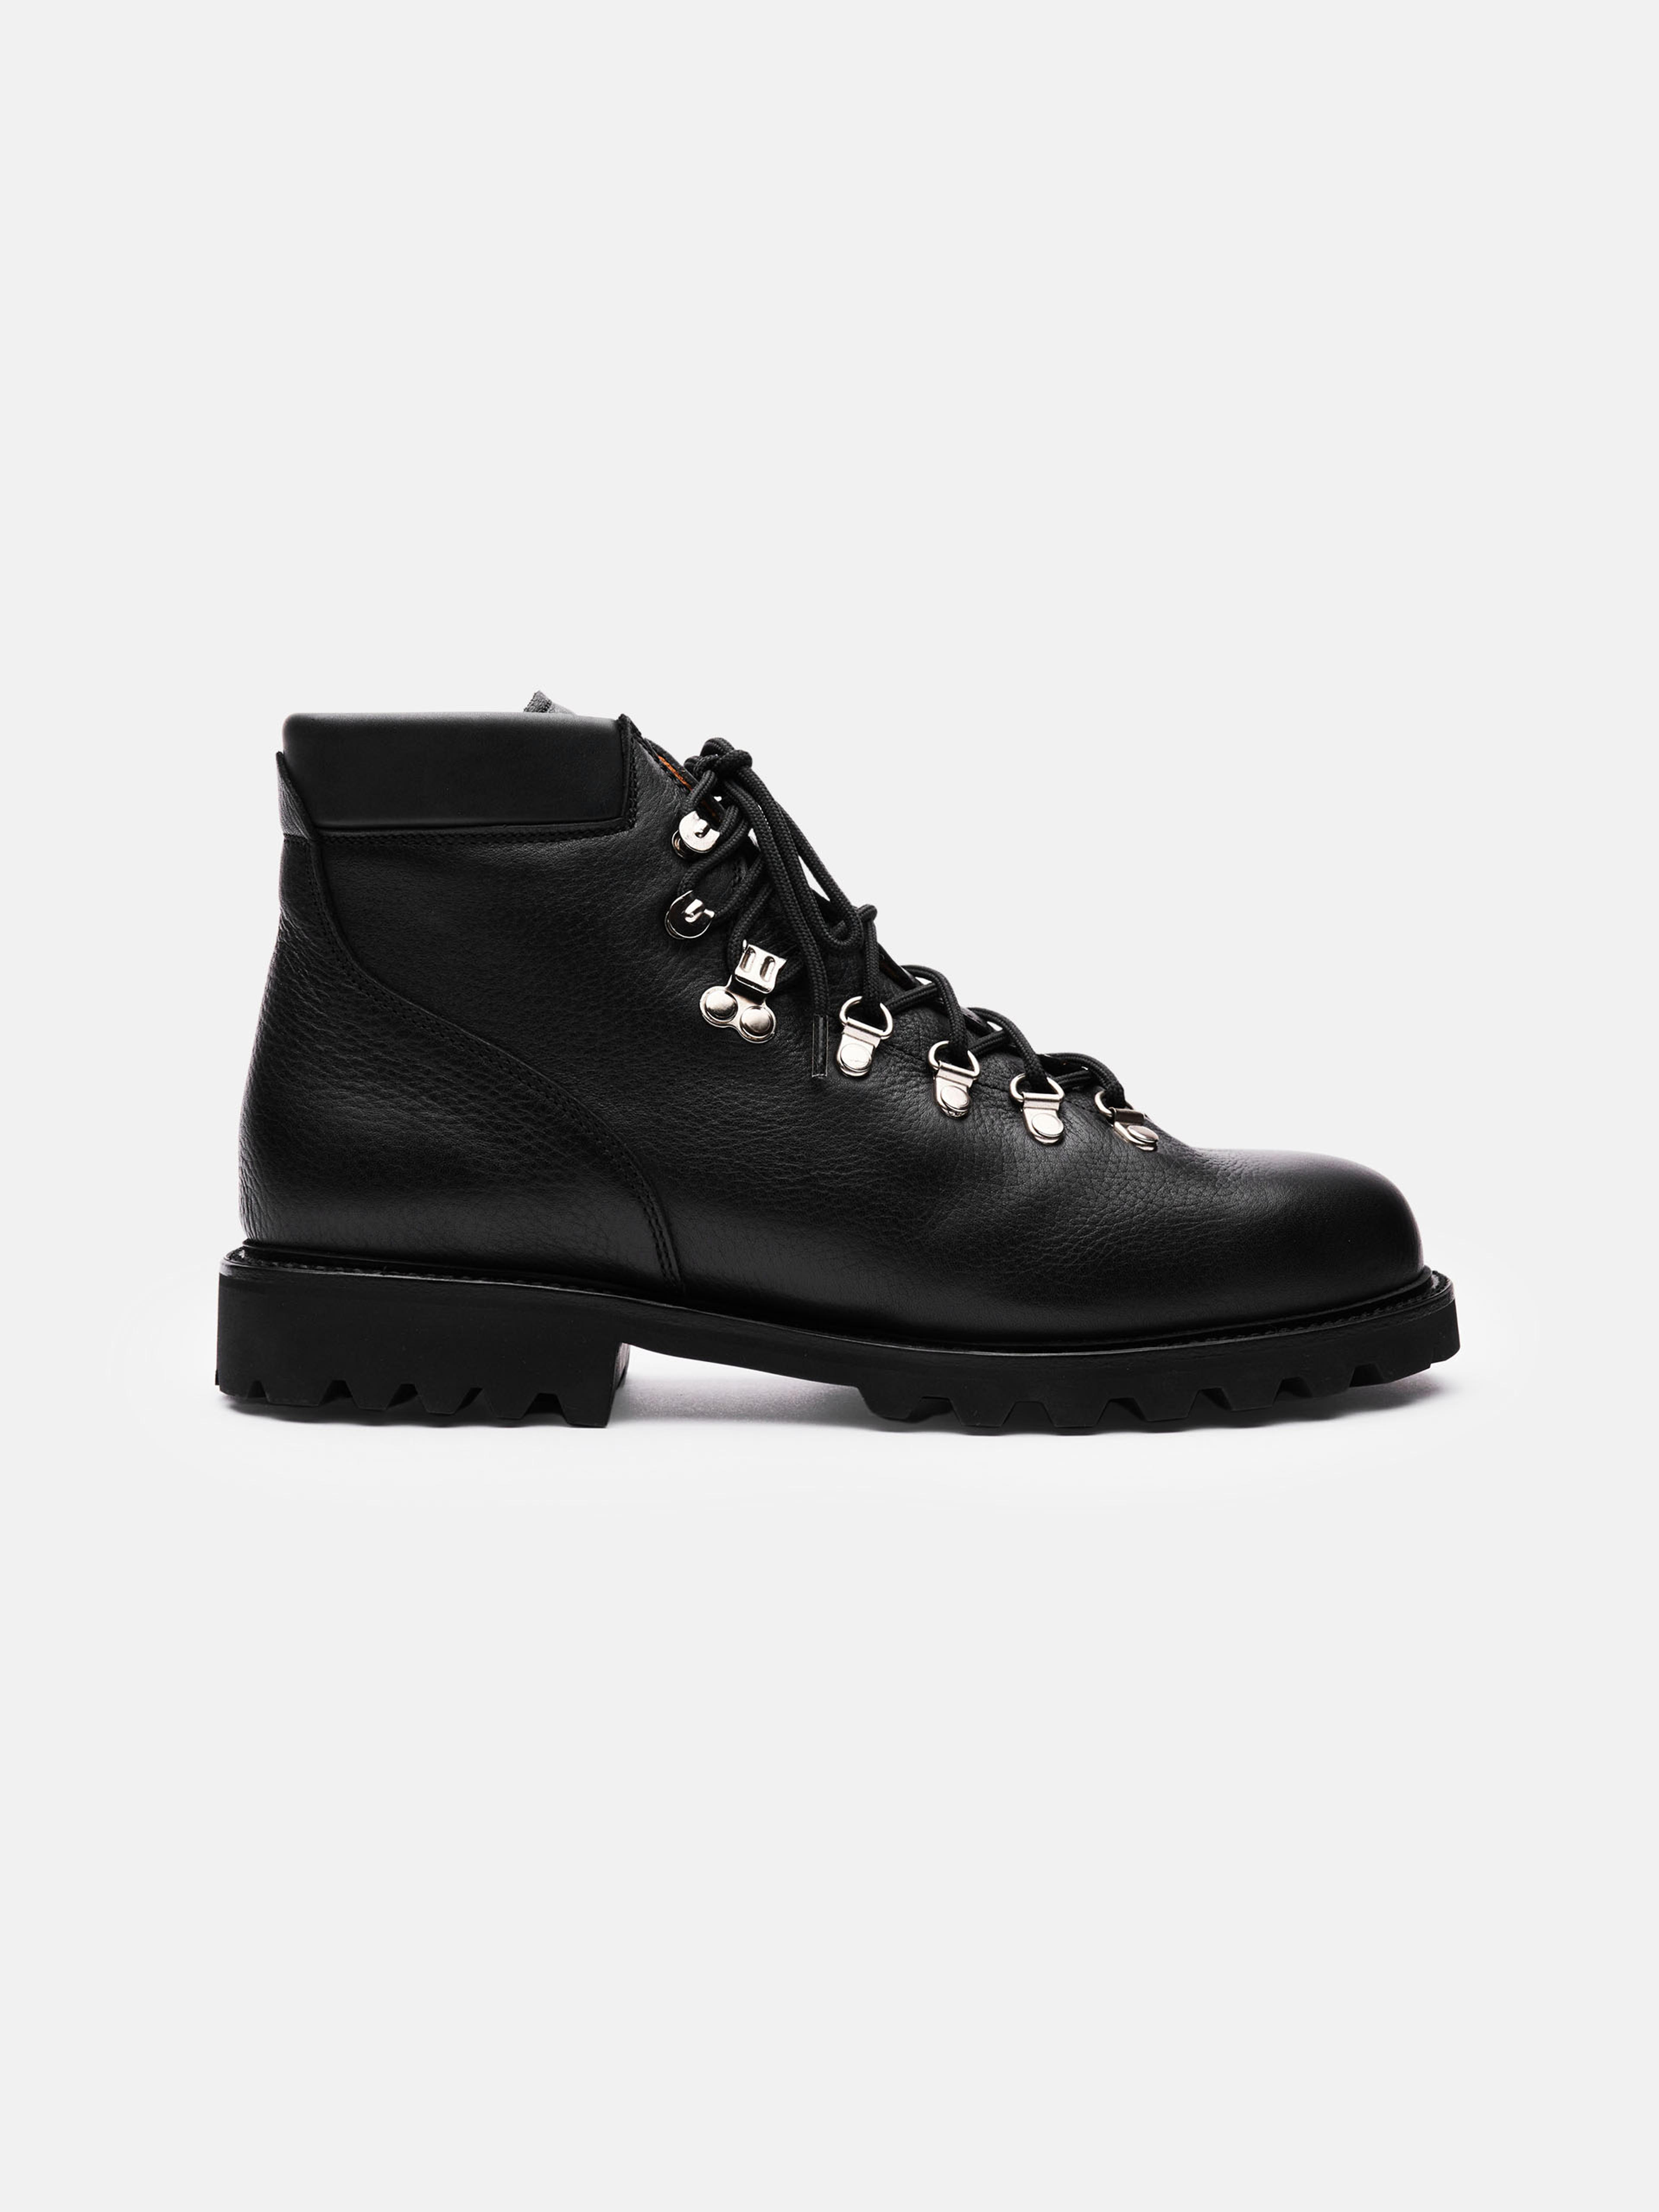 morjas.com/product/the-hiking-boot-black-grain/